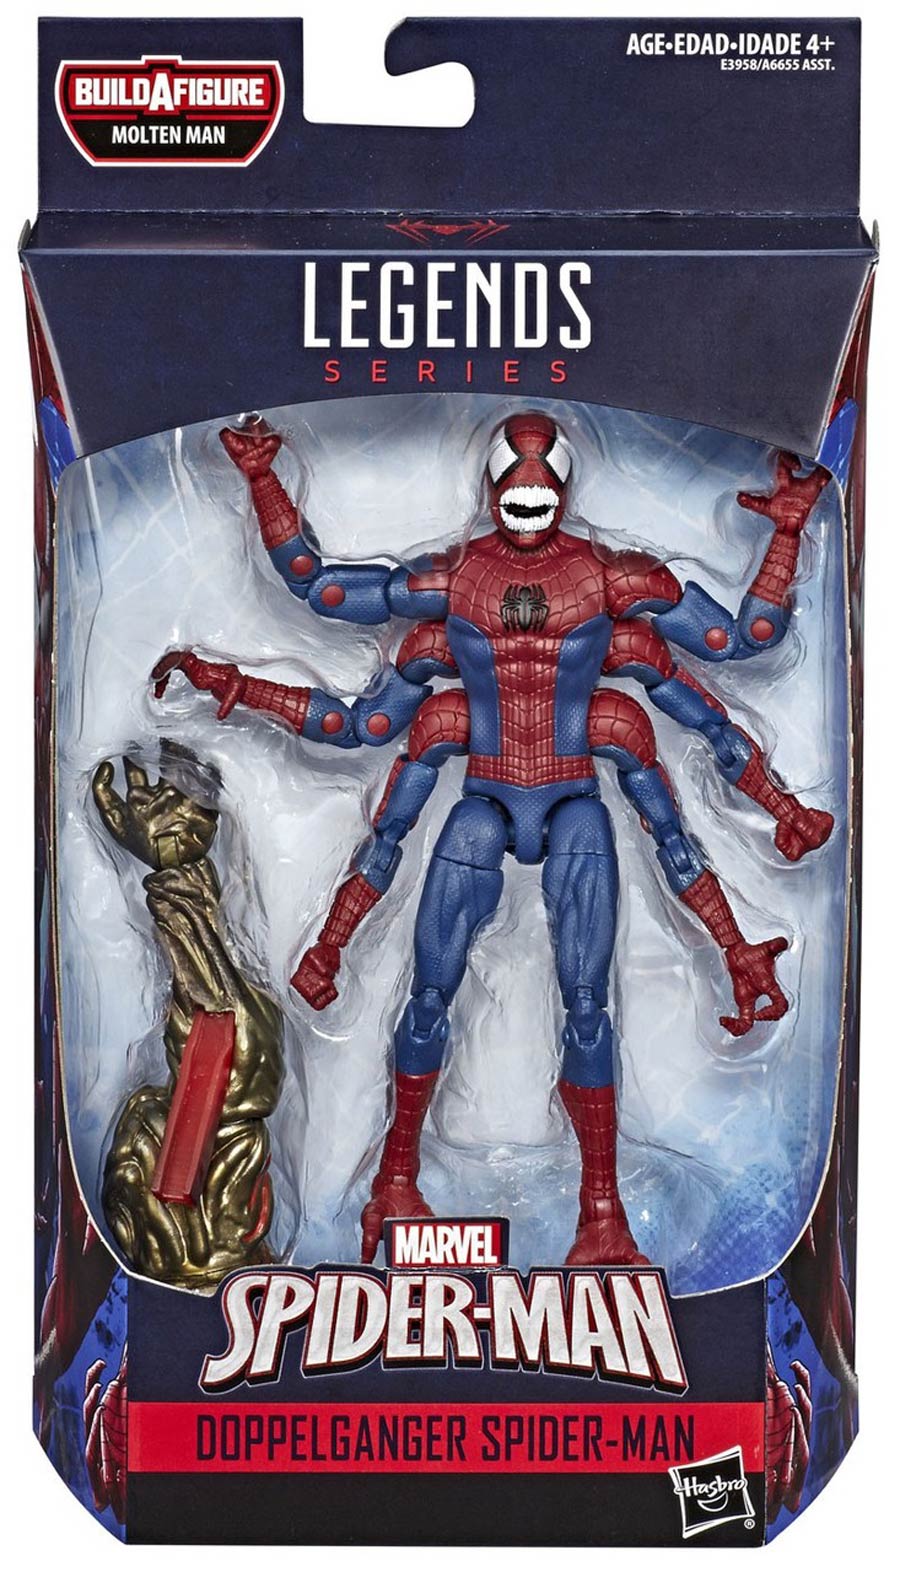 Spider-Man Far From Home Legends 2019 6-Inch Action Figure - Doppleganger Spider-Man